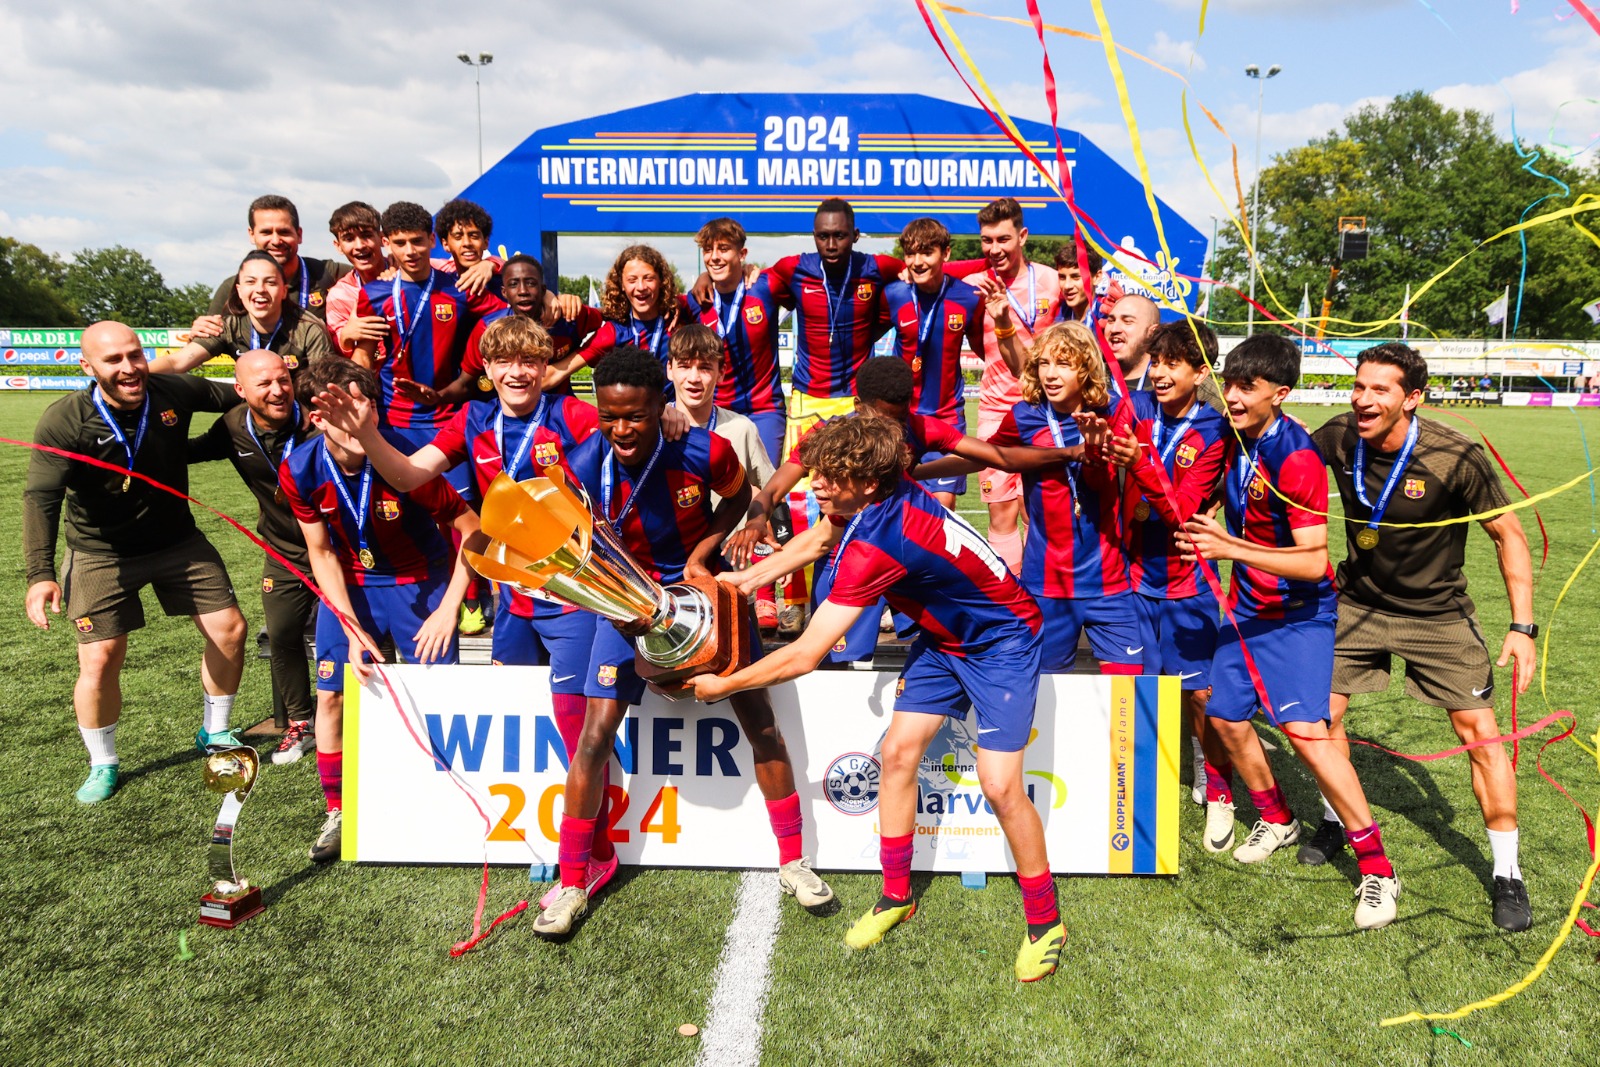 Marveld Turnier 2024 - Gewinner FC Barcelona